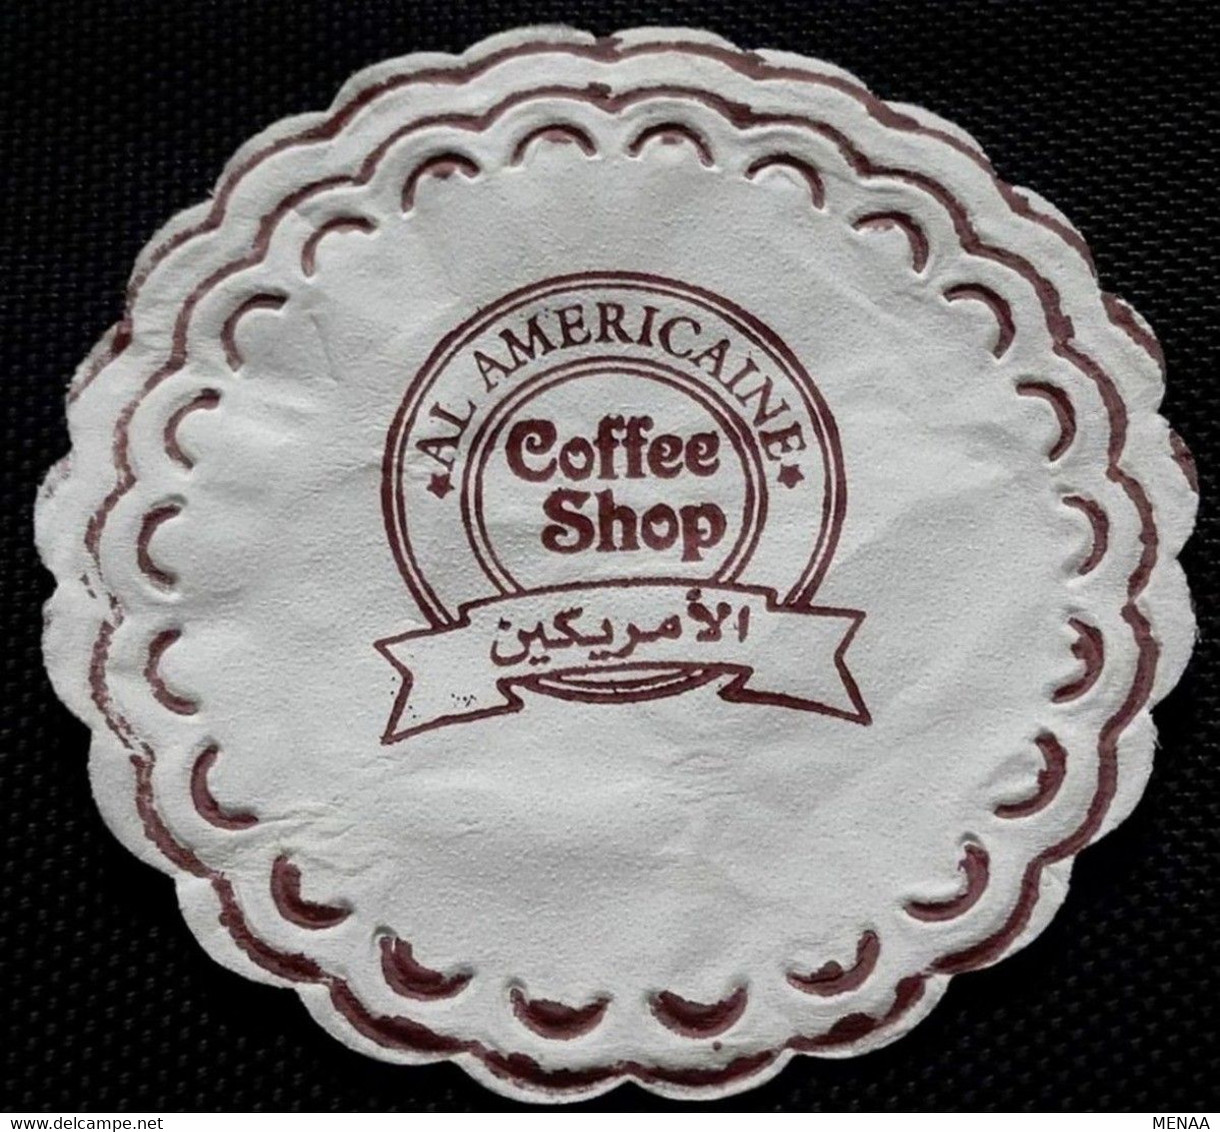 EGYPT - AL AMERICAINE COFFEE SHOP (Egypte) (Egitto) (Ägypten) (Egipto) (Egypten) Africa - Serviettes Publicitaires